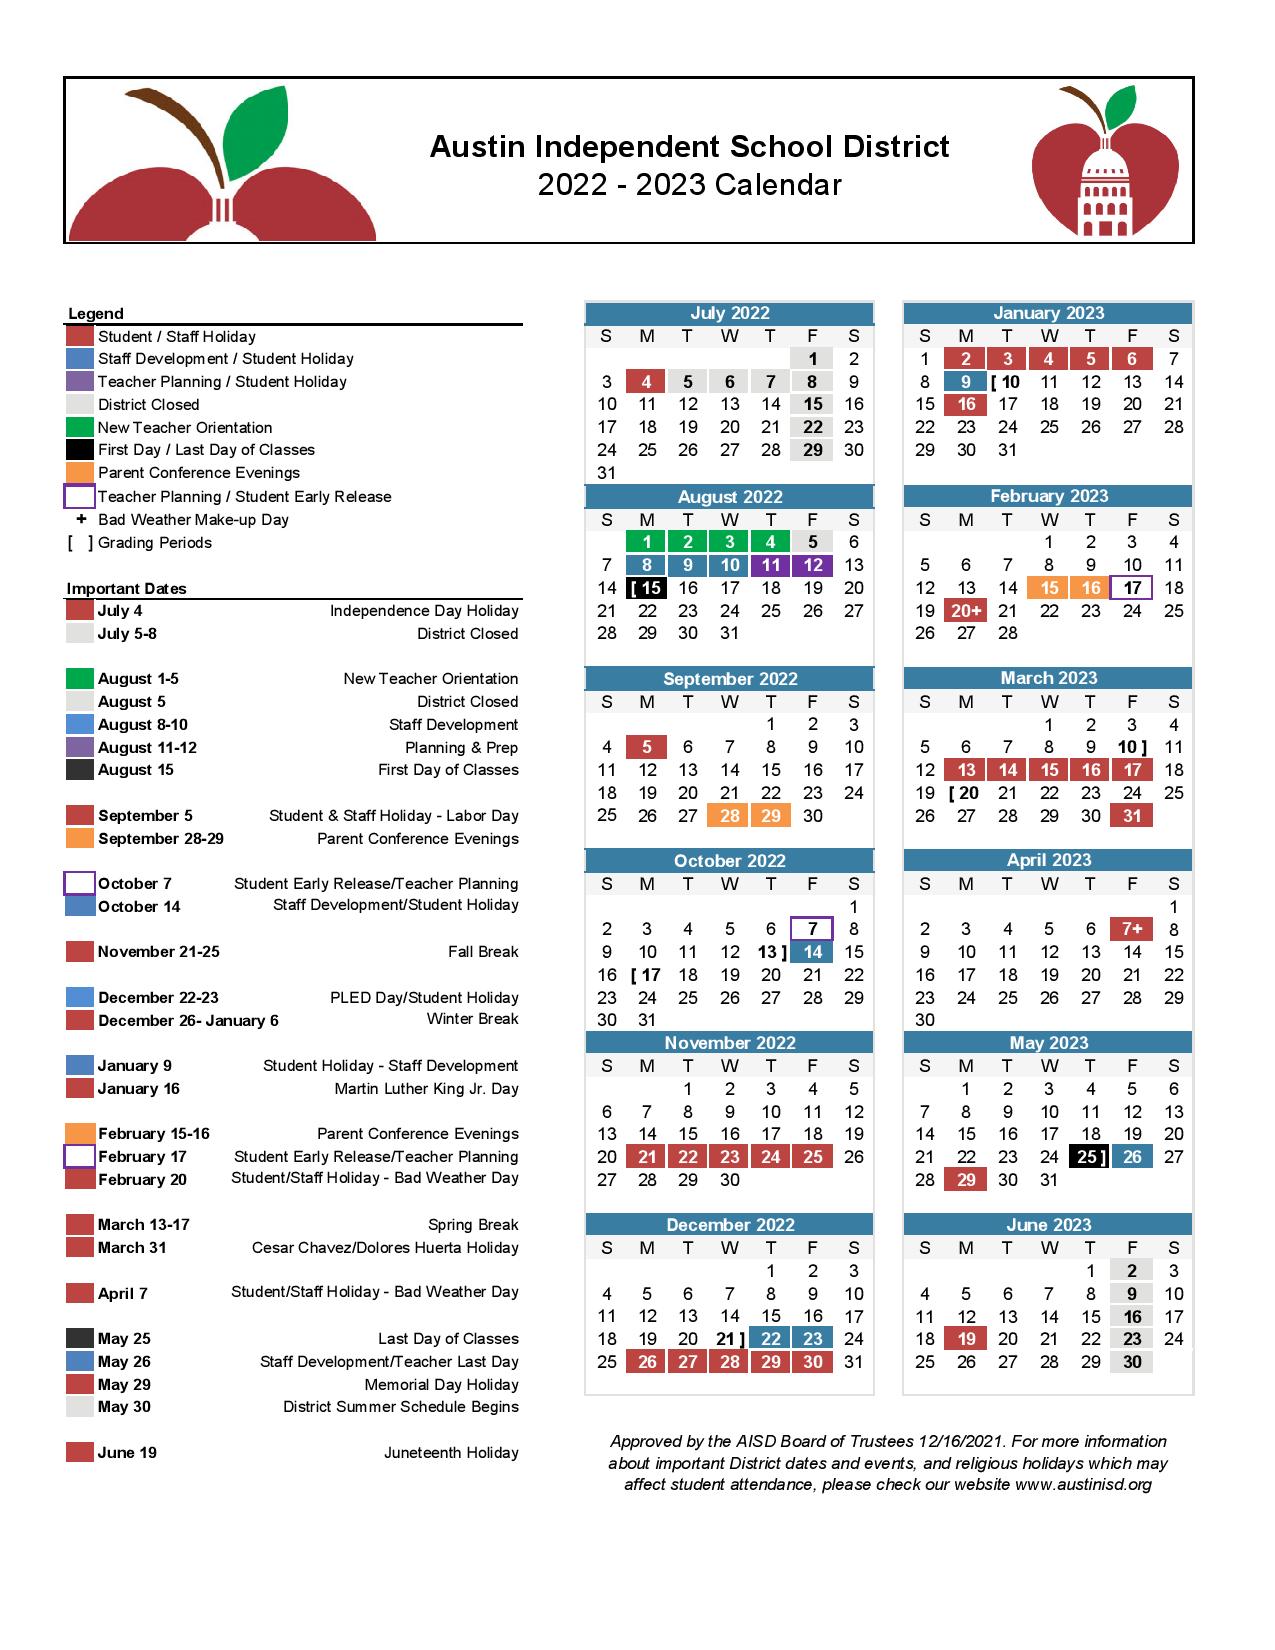 Austin Independent School District Calendar Holidays 2022 2023